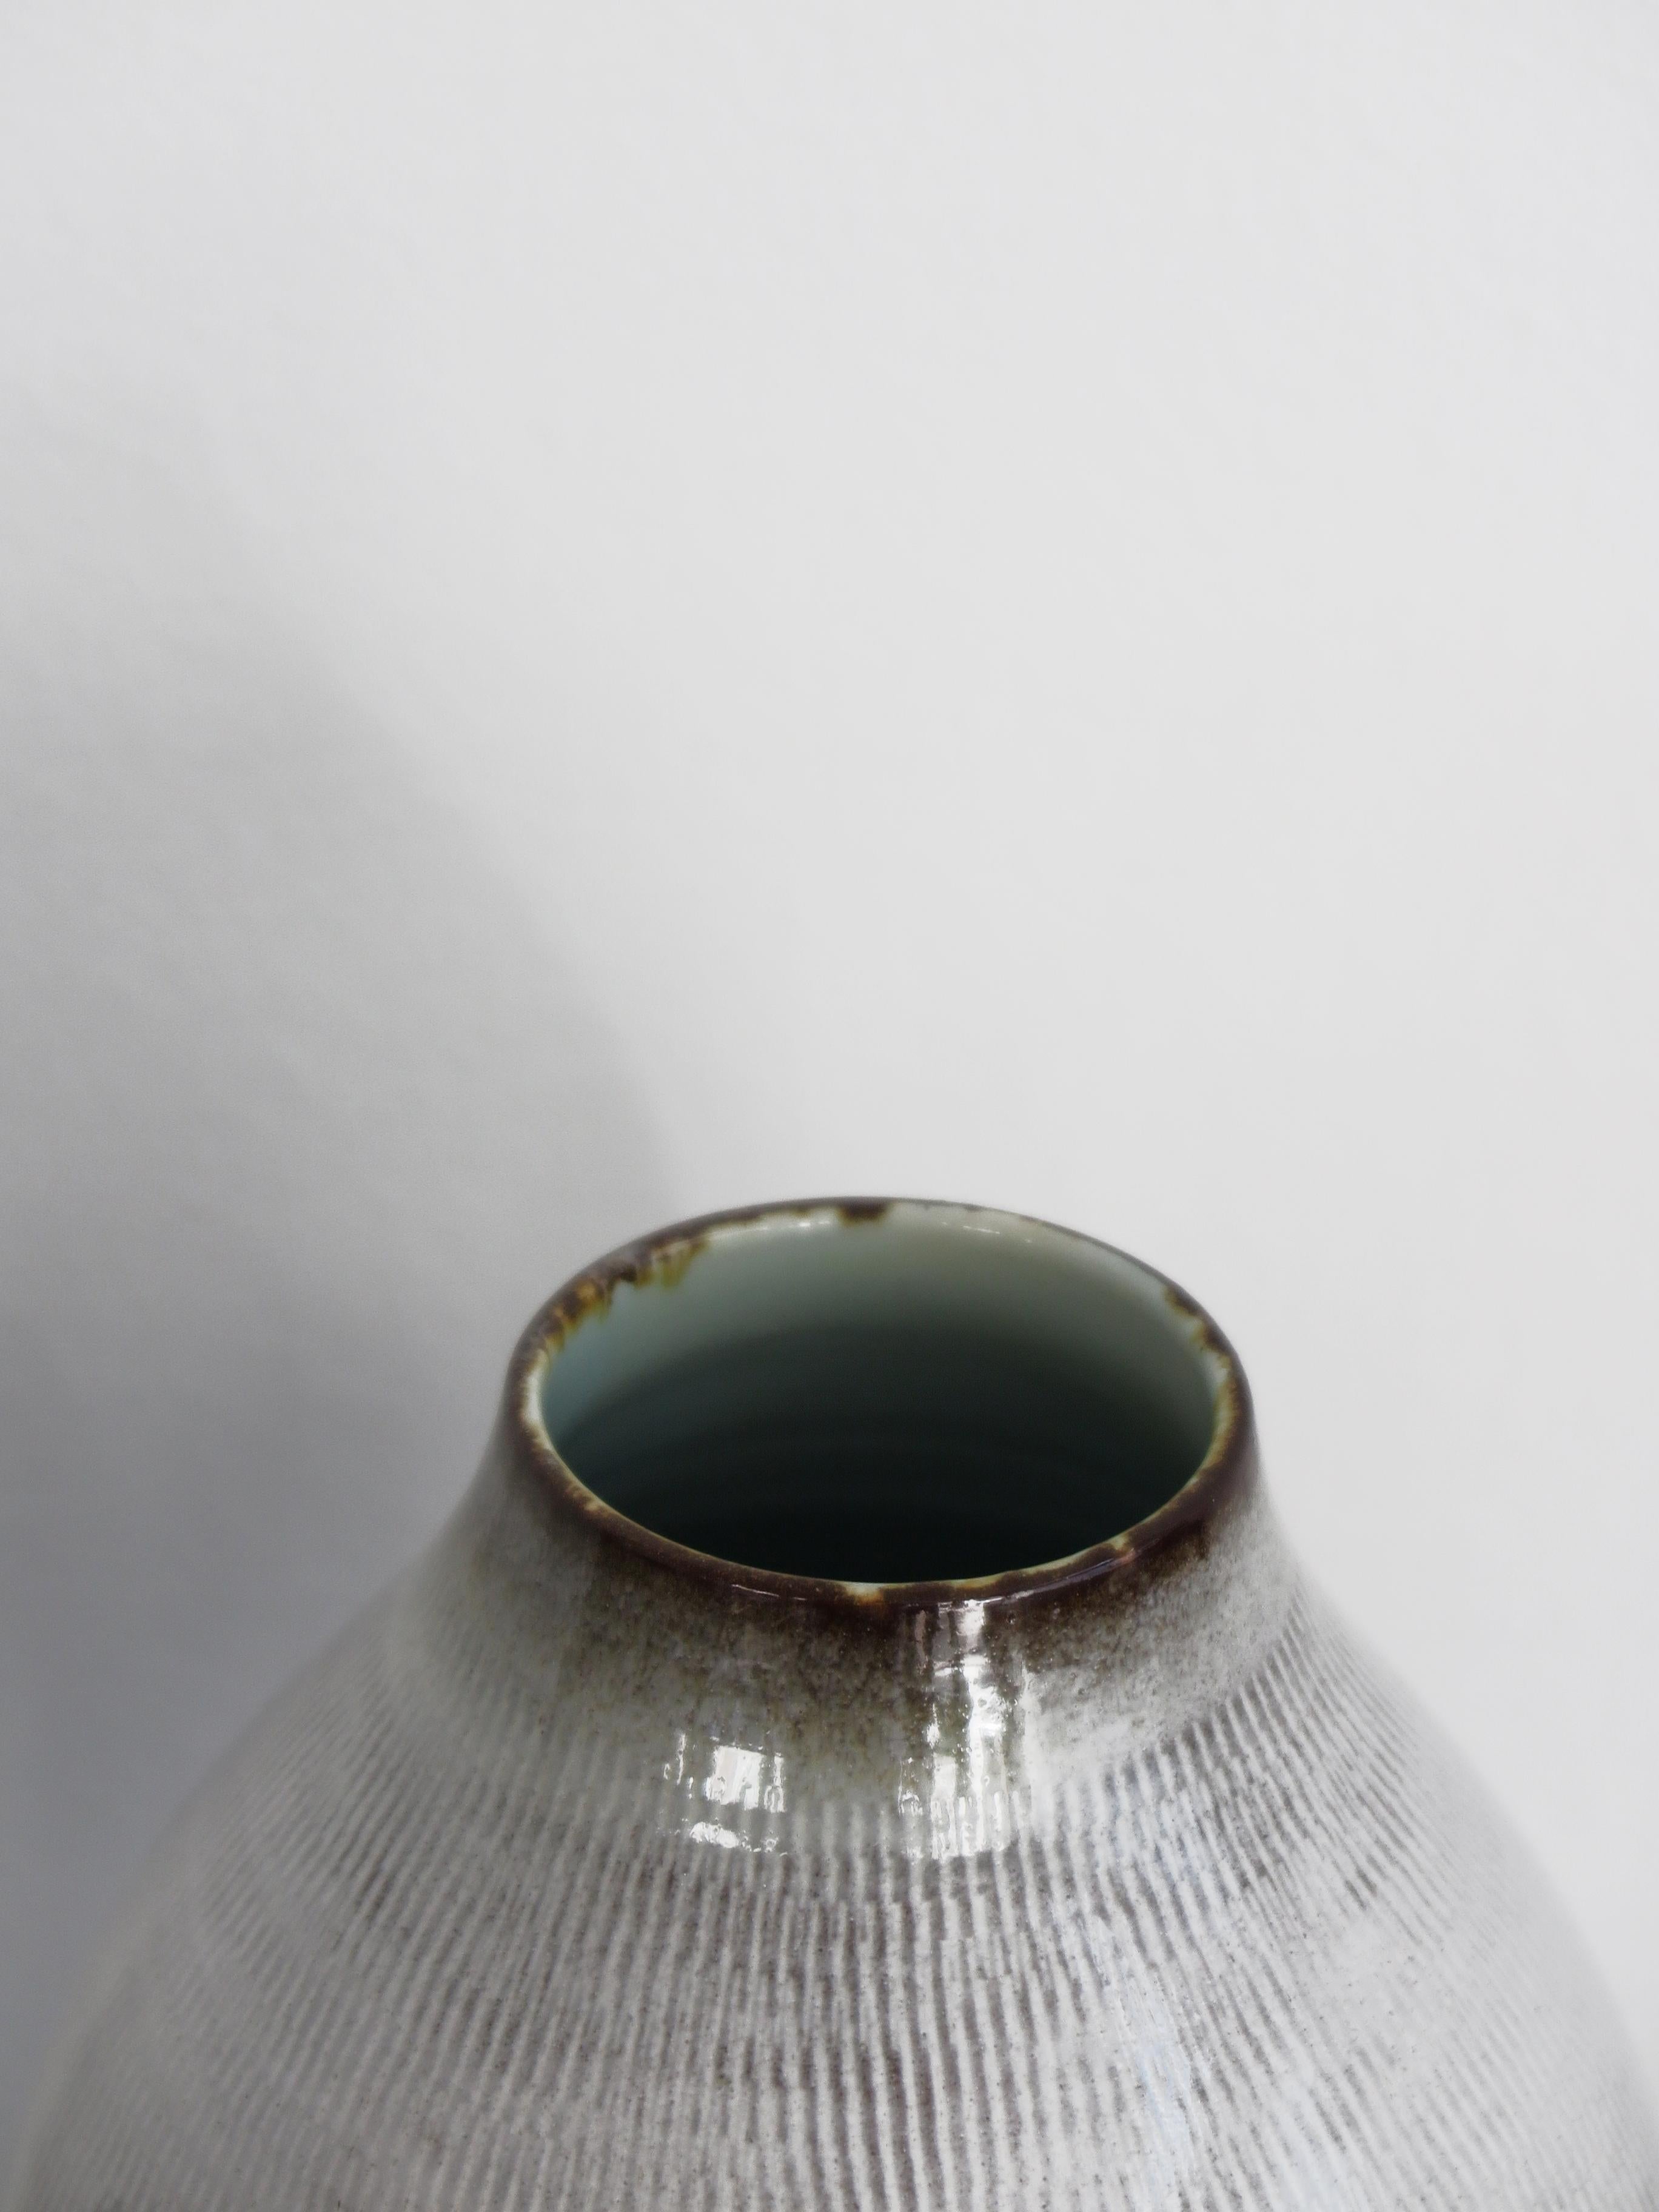 Italian Contemporary Artistic Ceramic Canopo Vase by Amaaro, 2022 For Sale 3